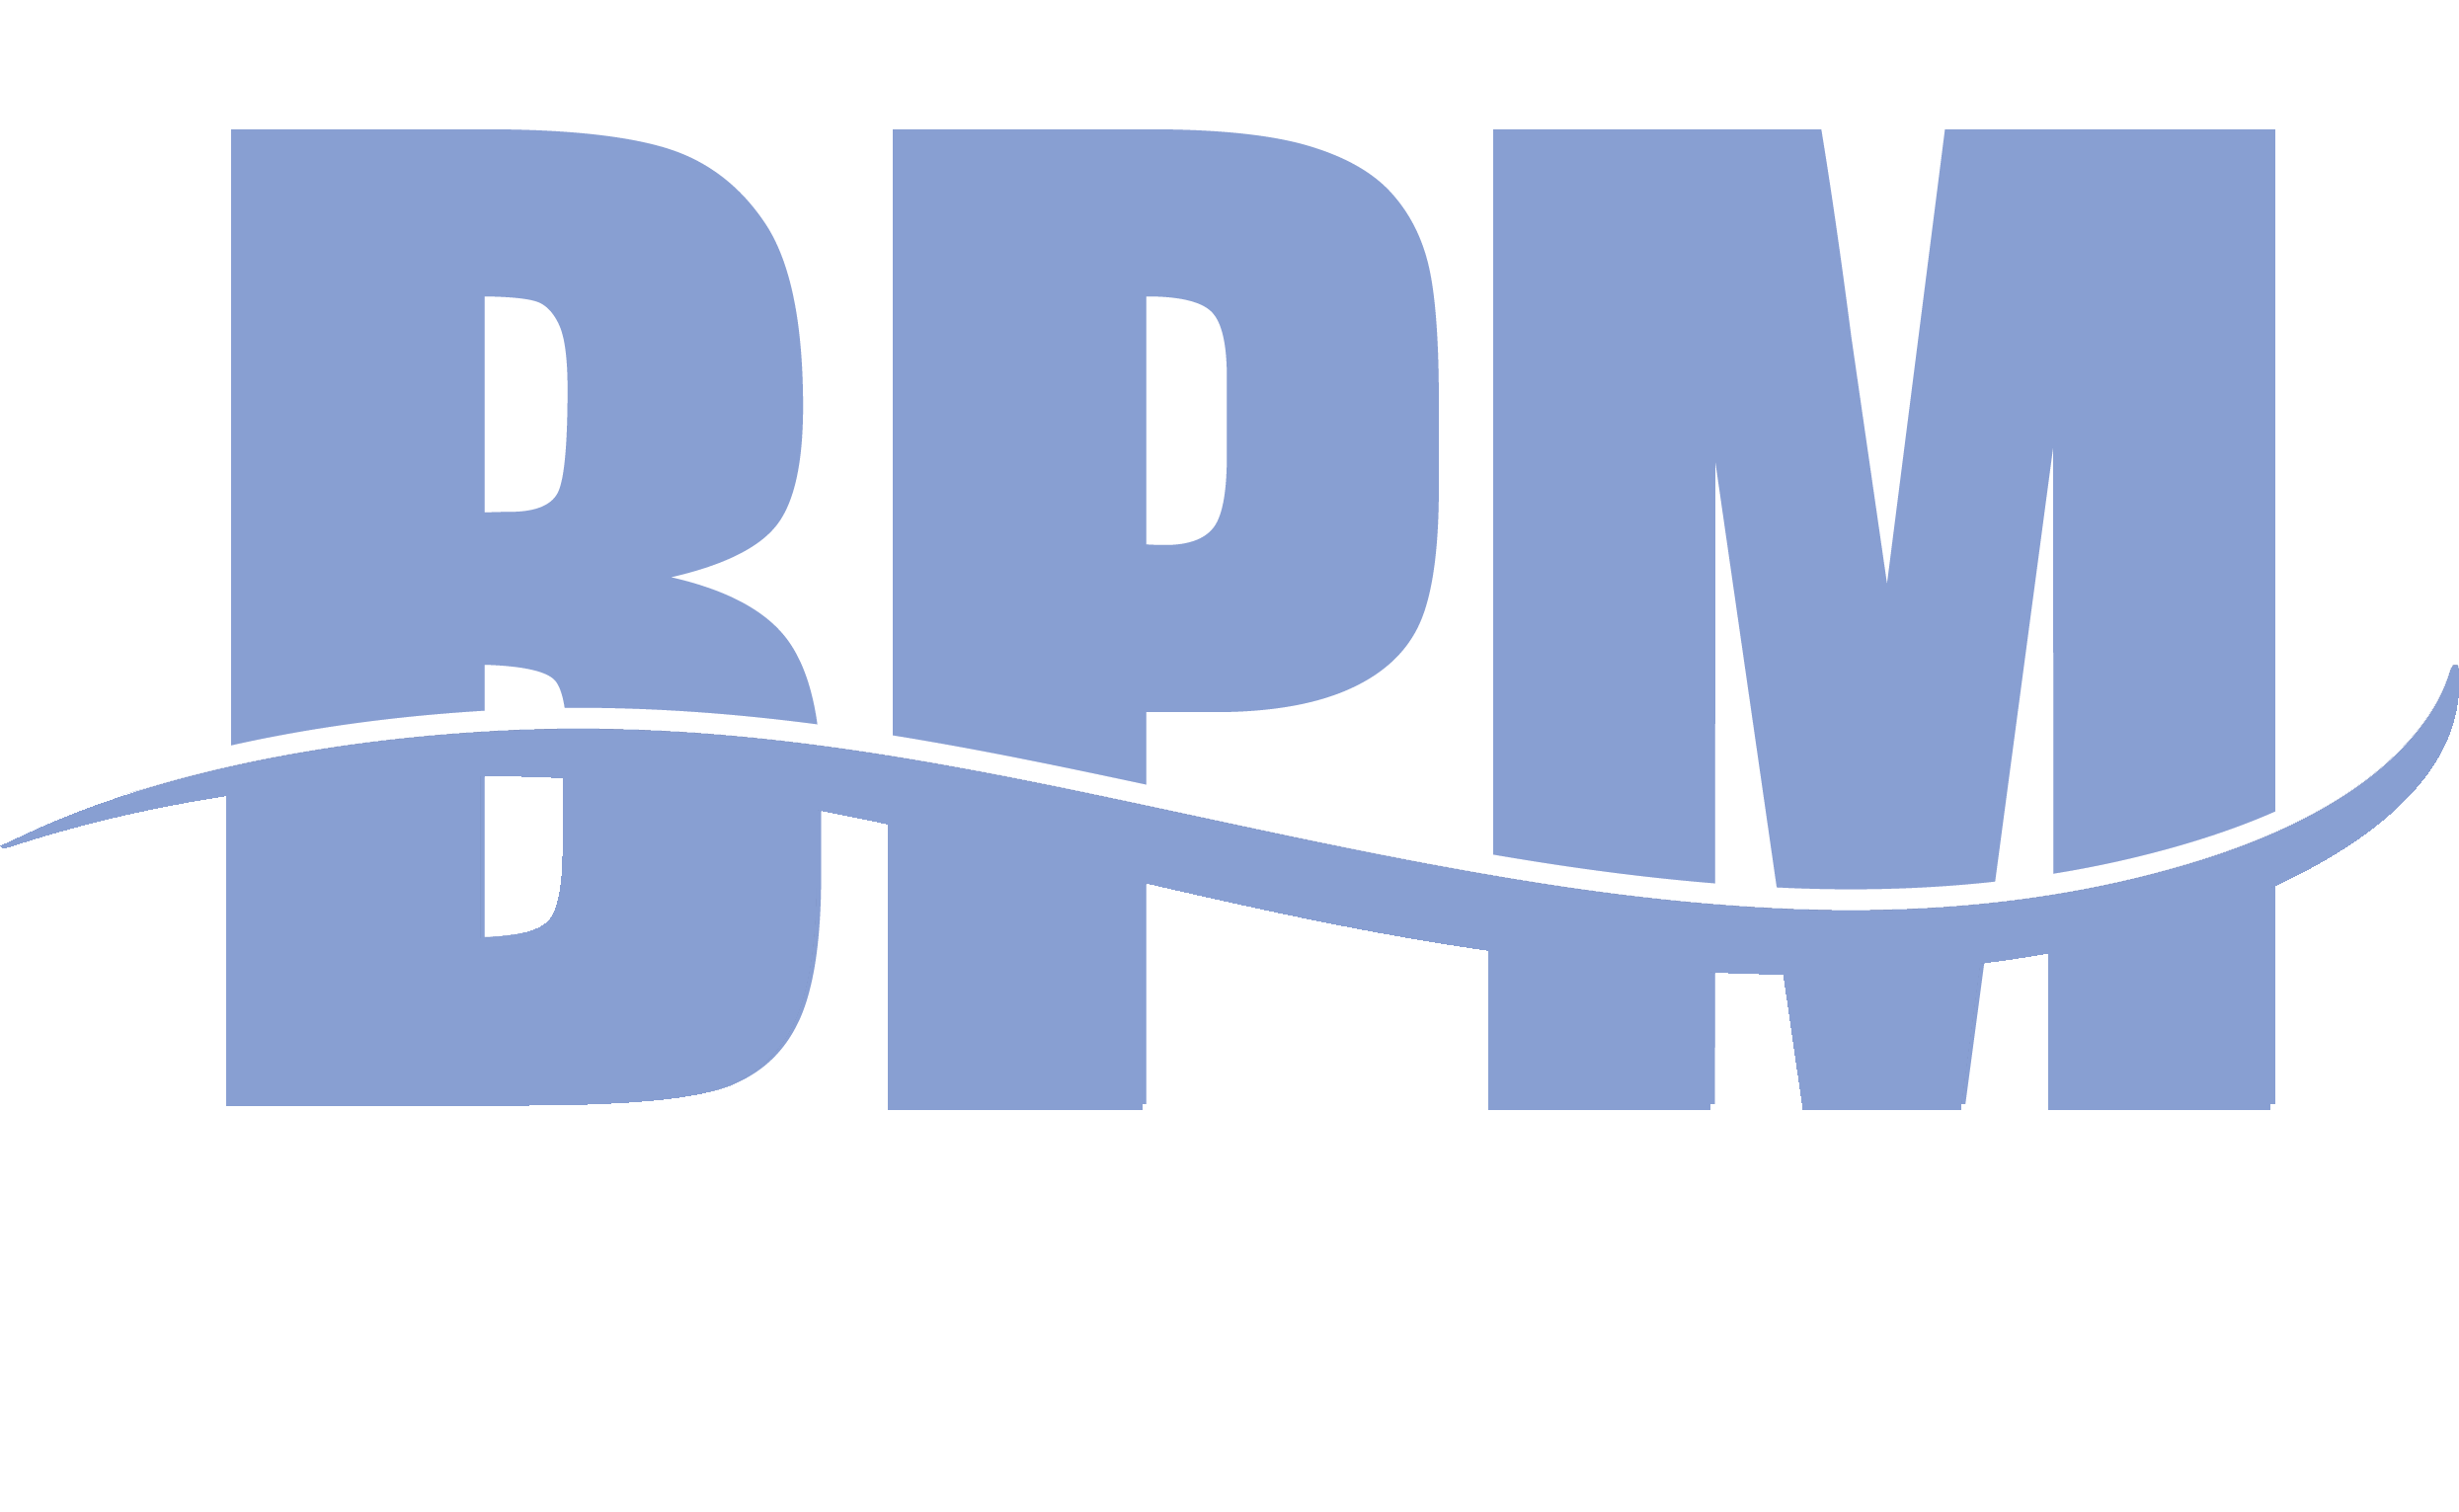 Burns Pool Management